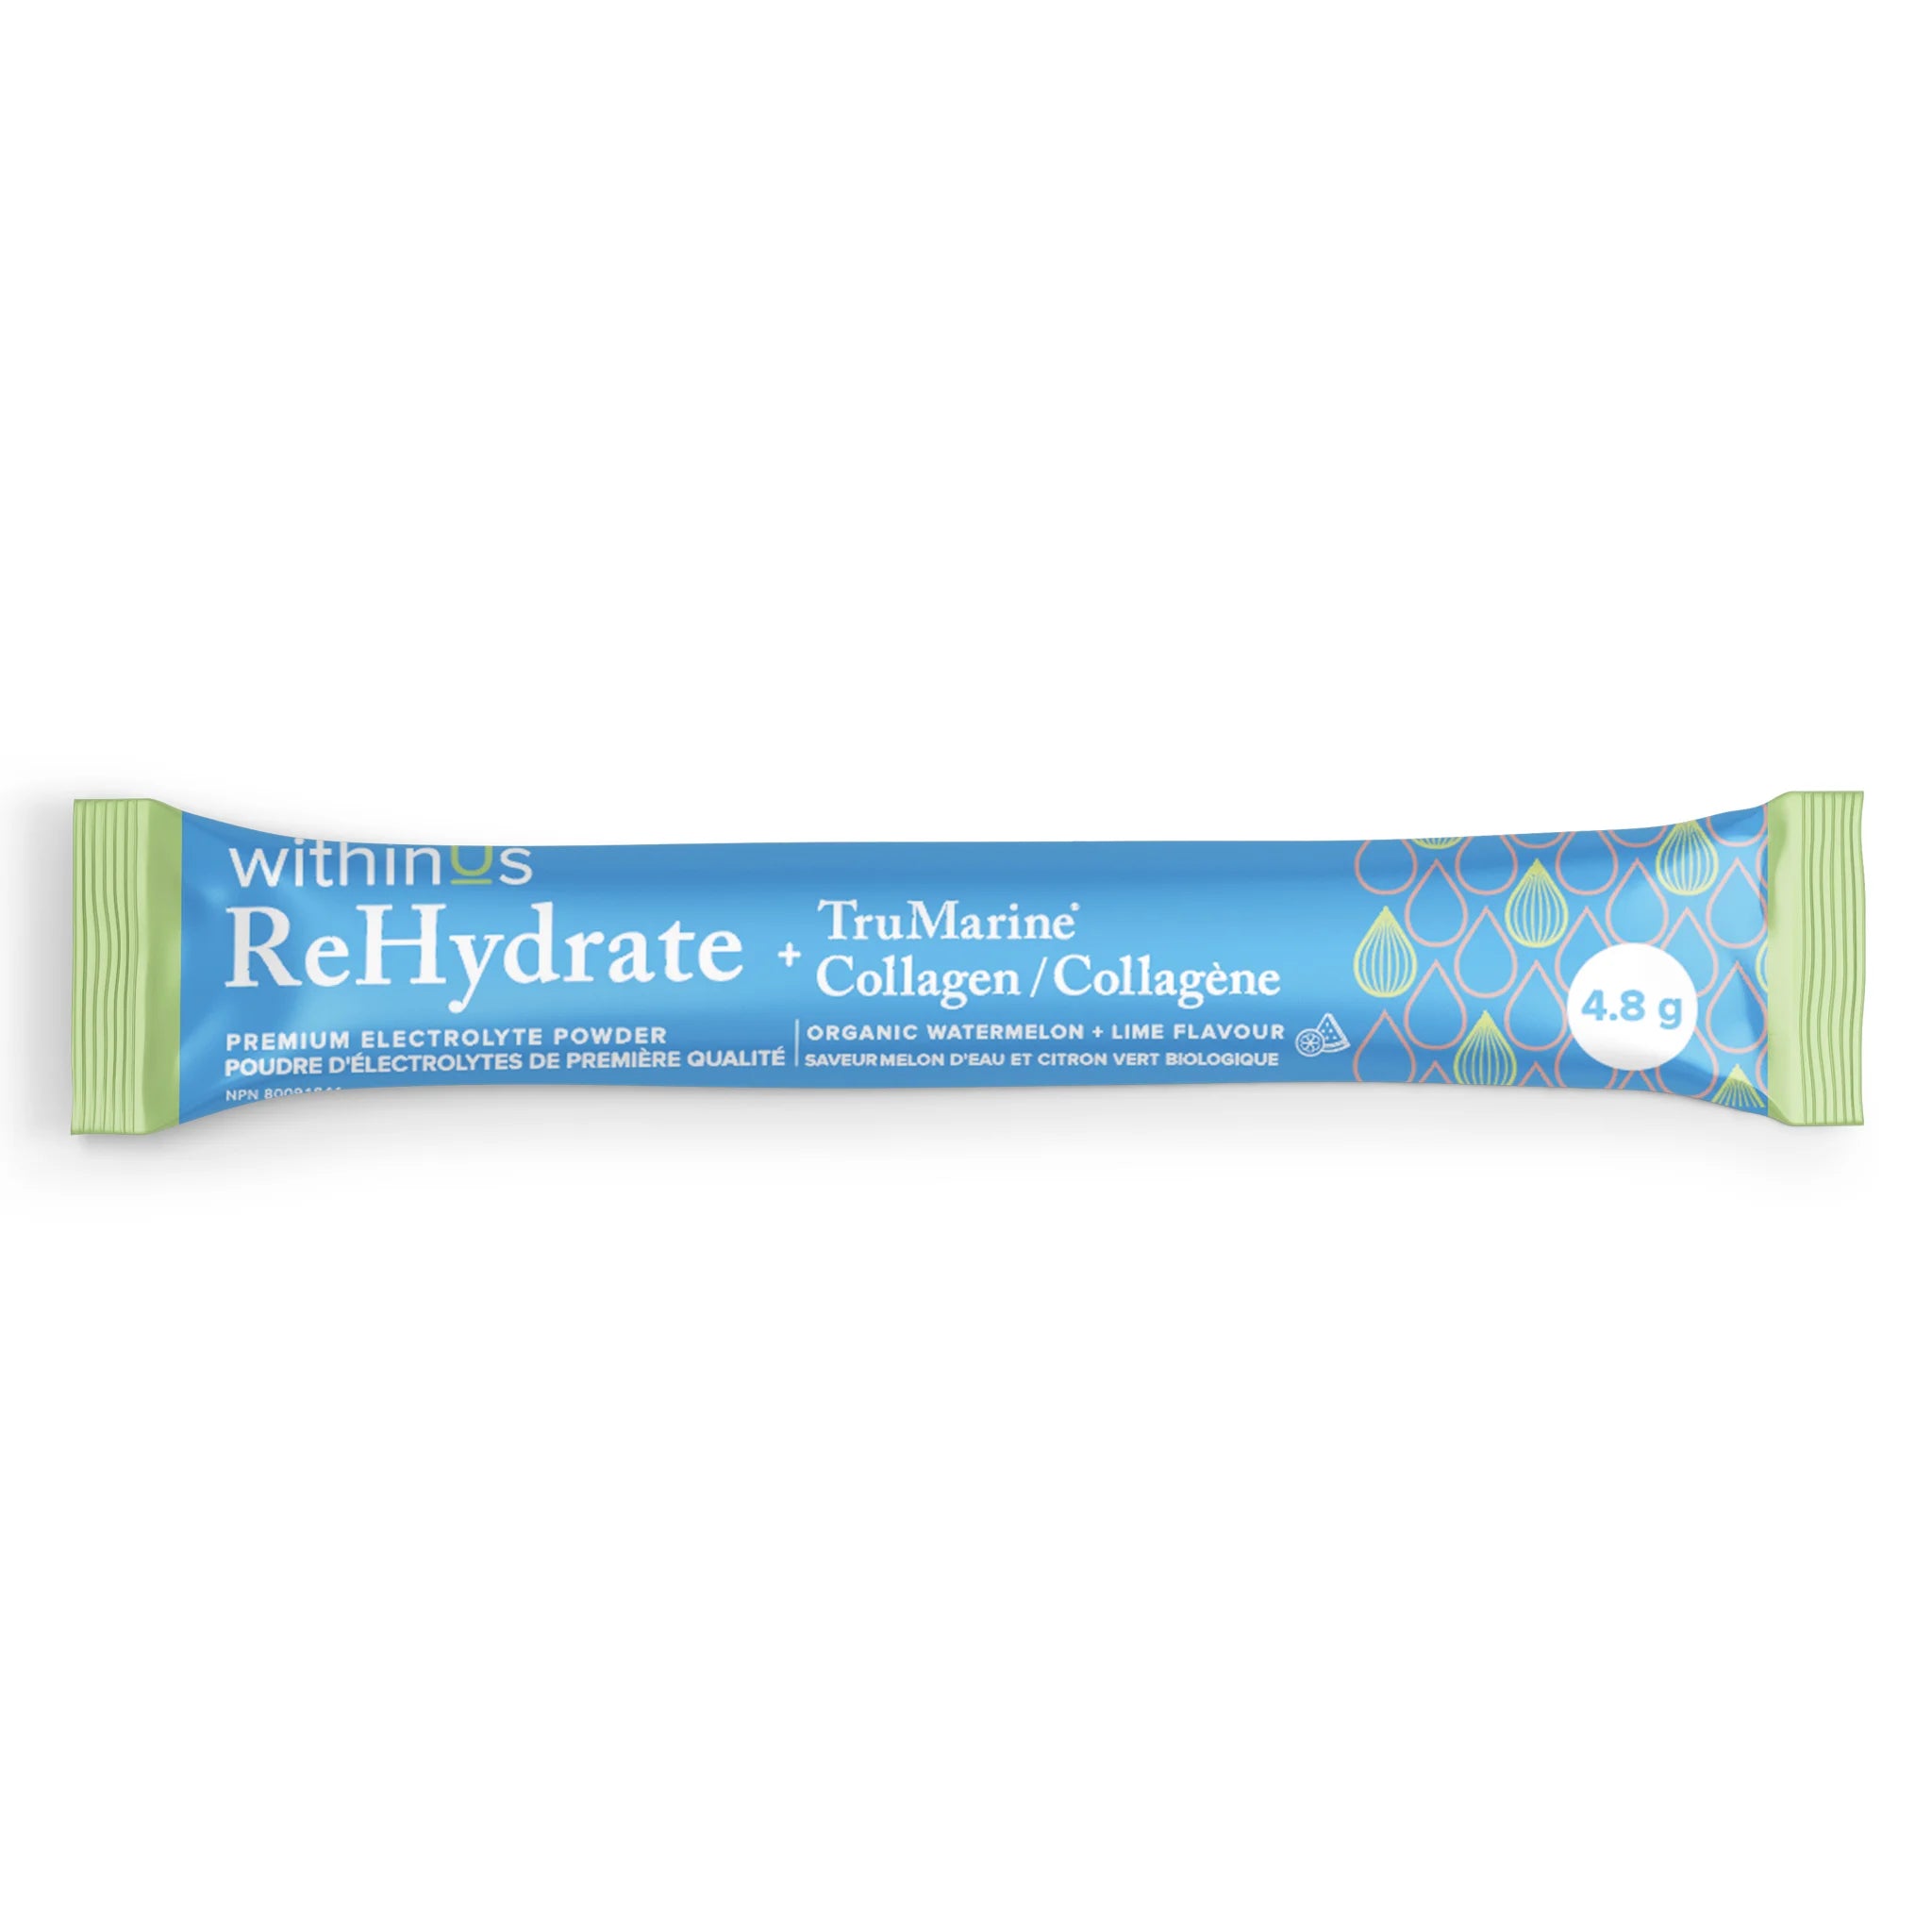 ReHydrate + TruMarine® Collagen Box WATERMELON LIME - 20 Stick Packs